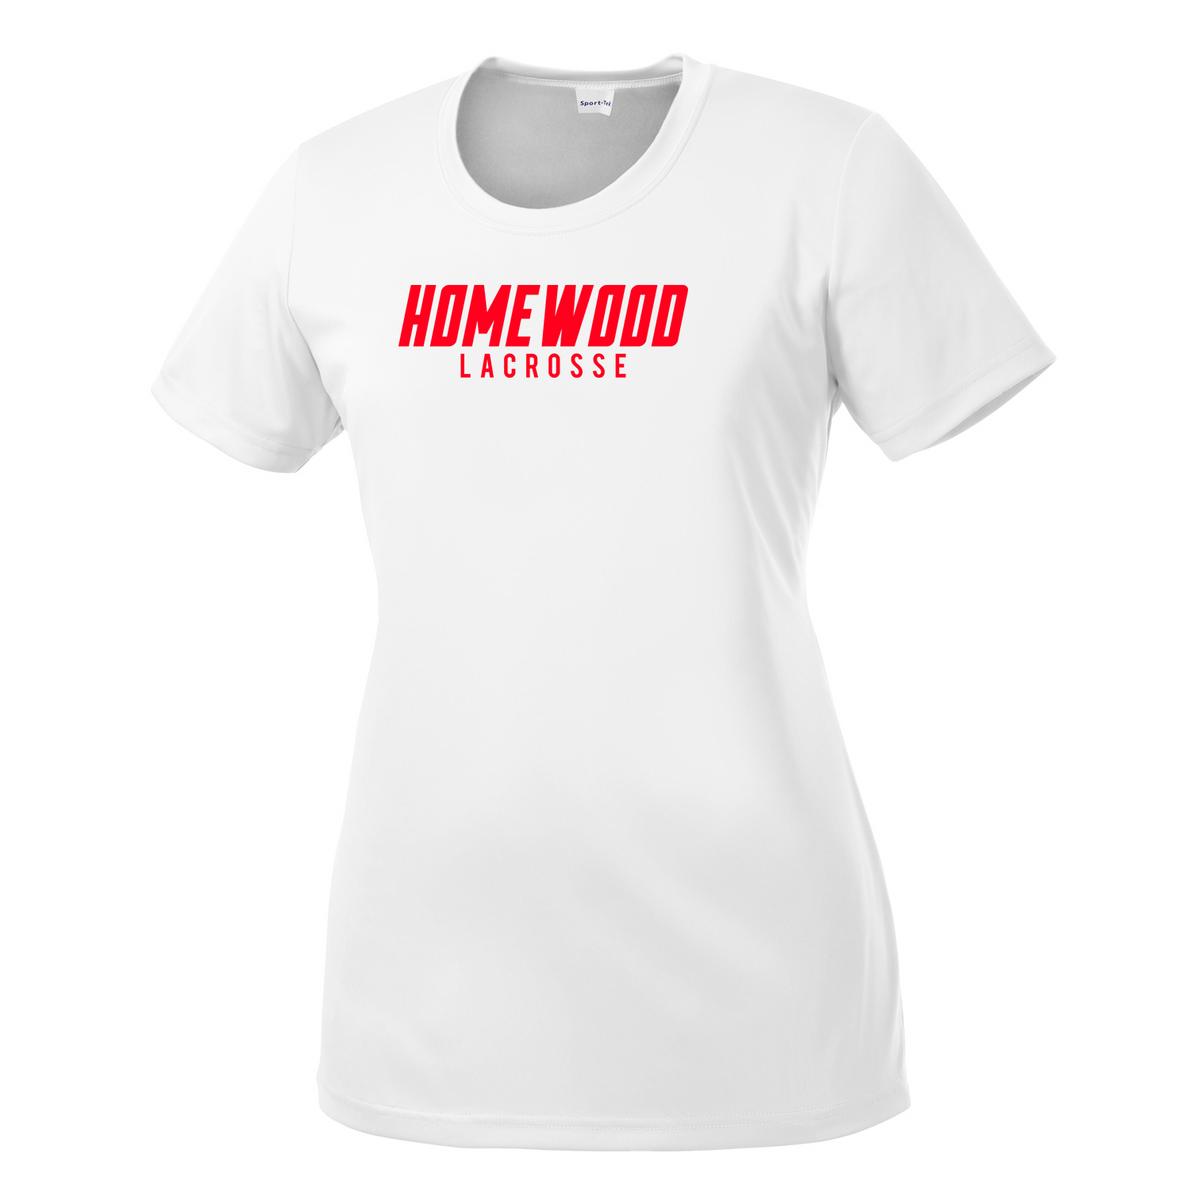 Homewood Lacrosse Women's Performance Tee